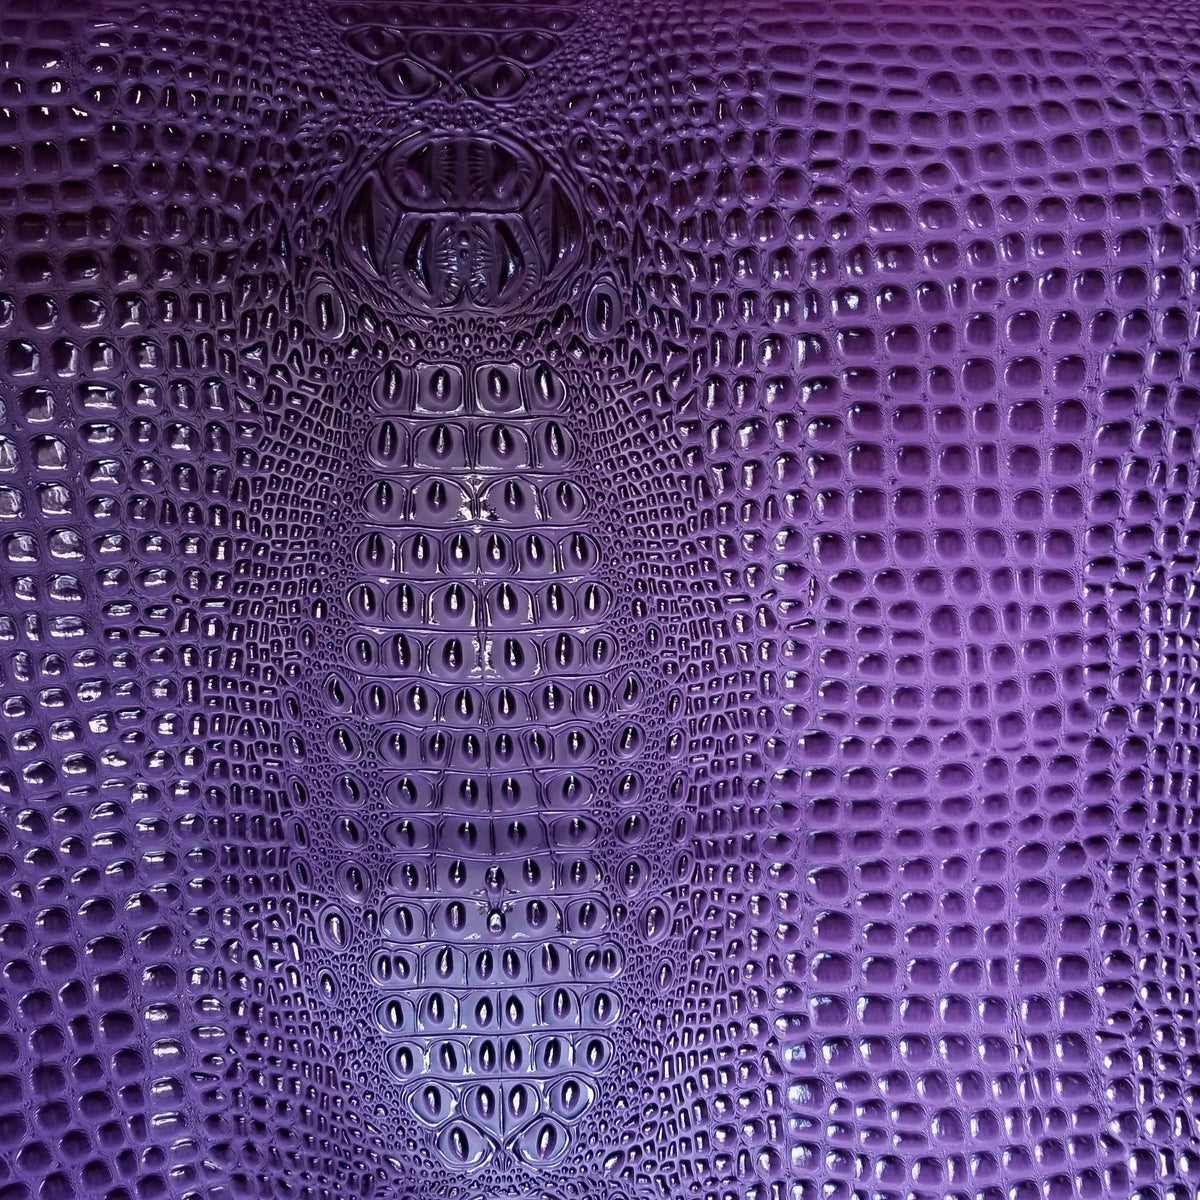 Shiny Fuchsia Crocodile Vinyl Fabric